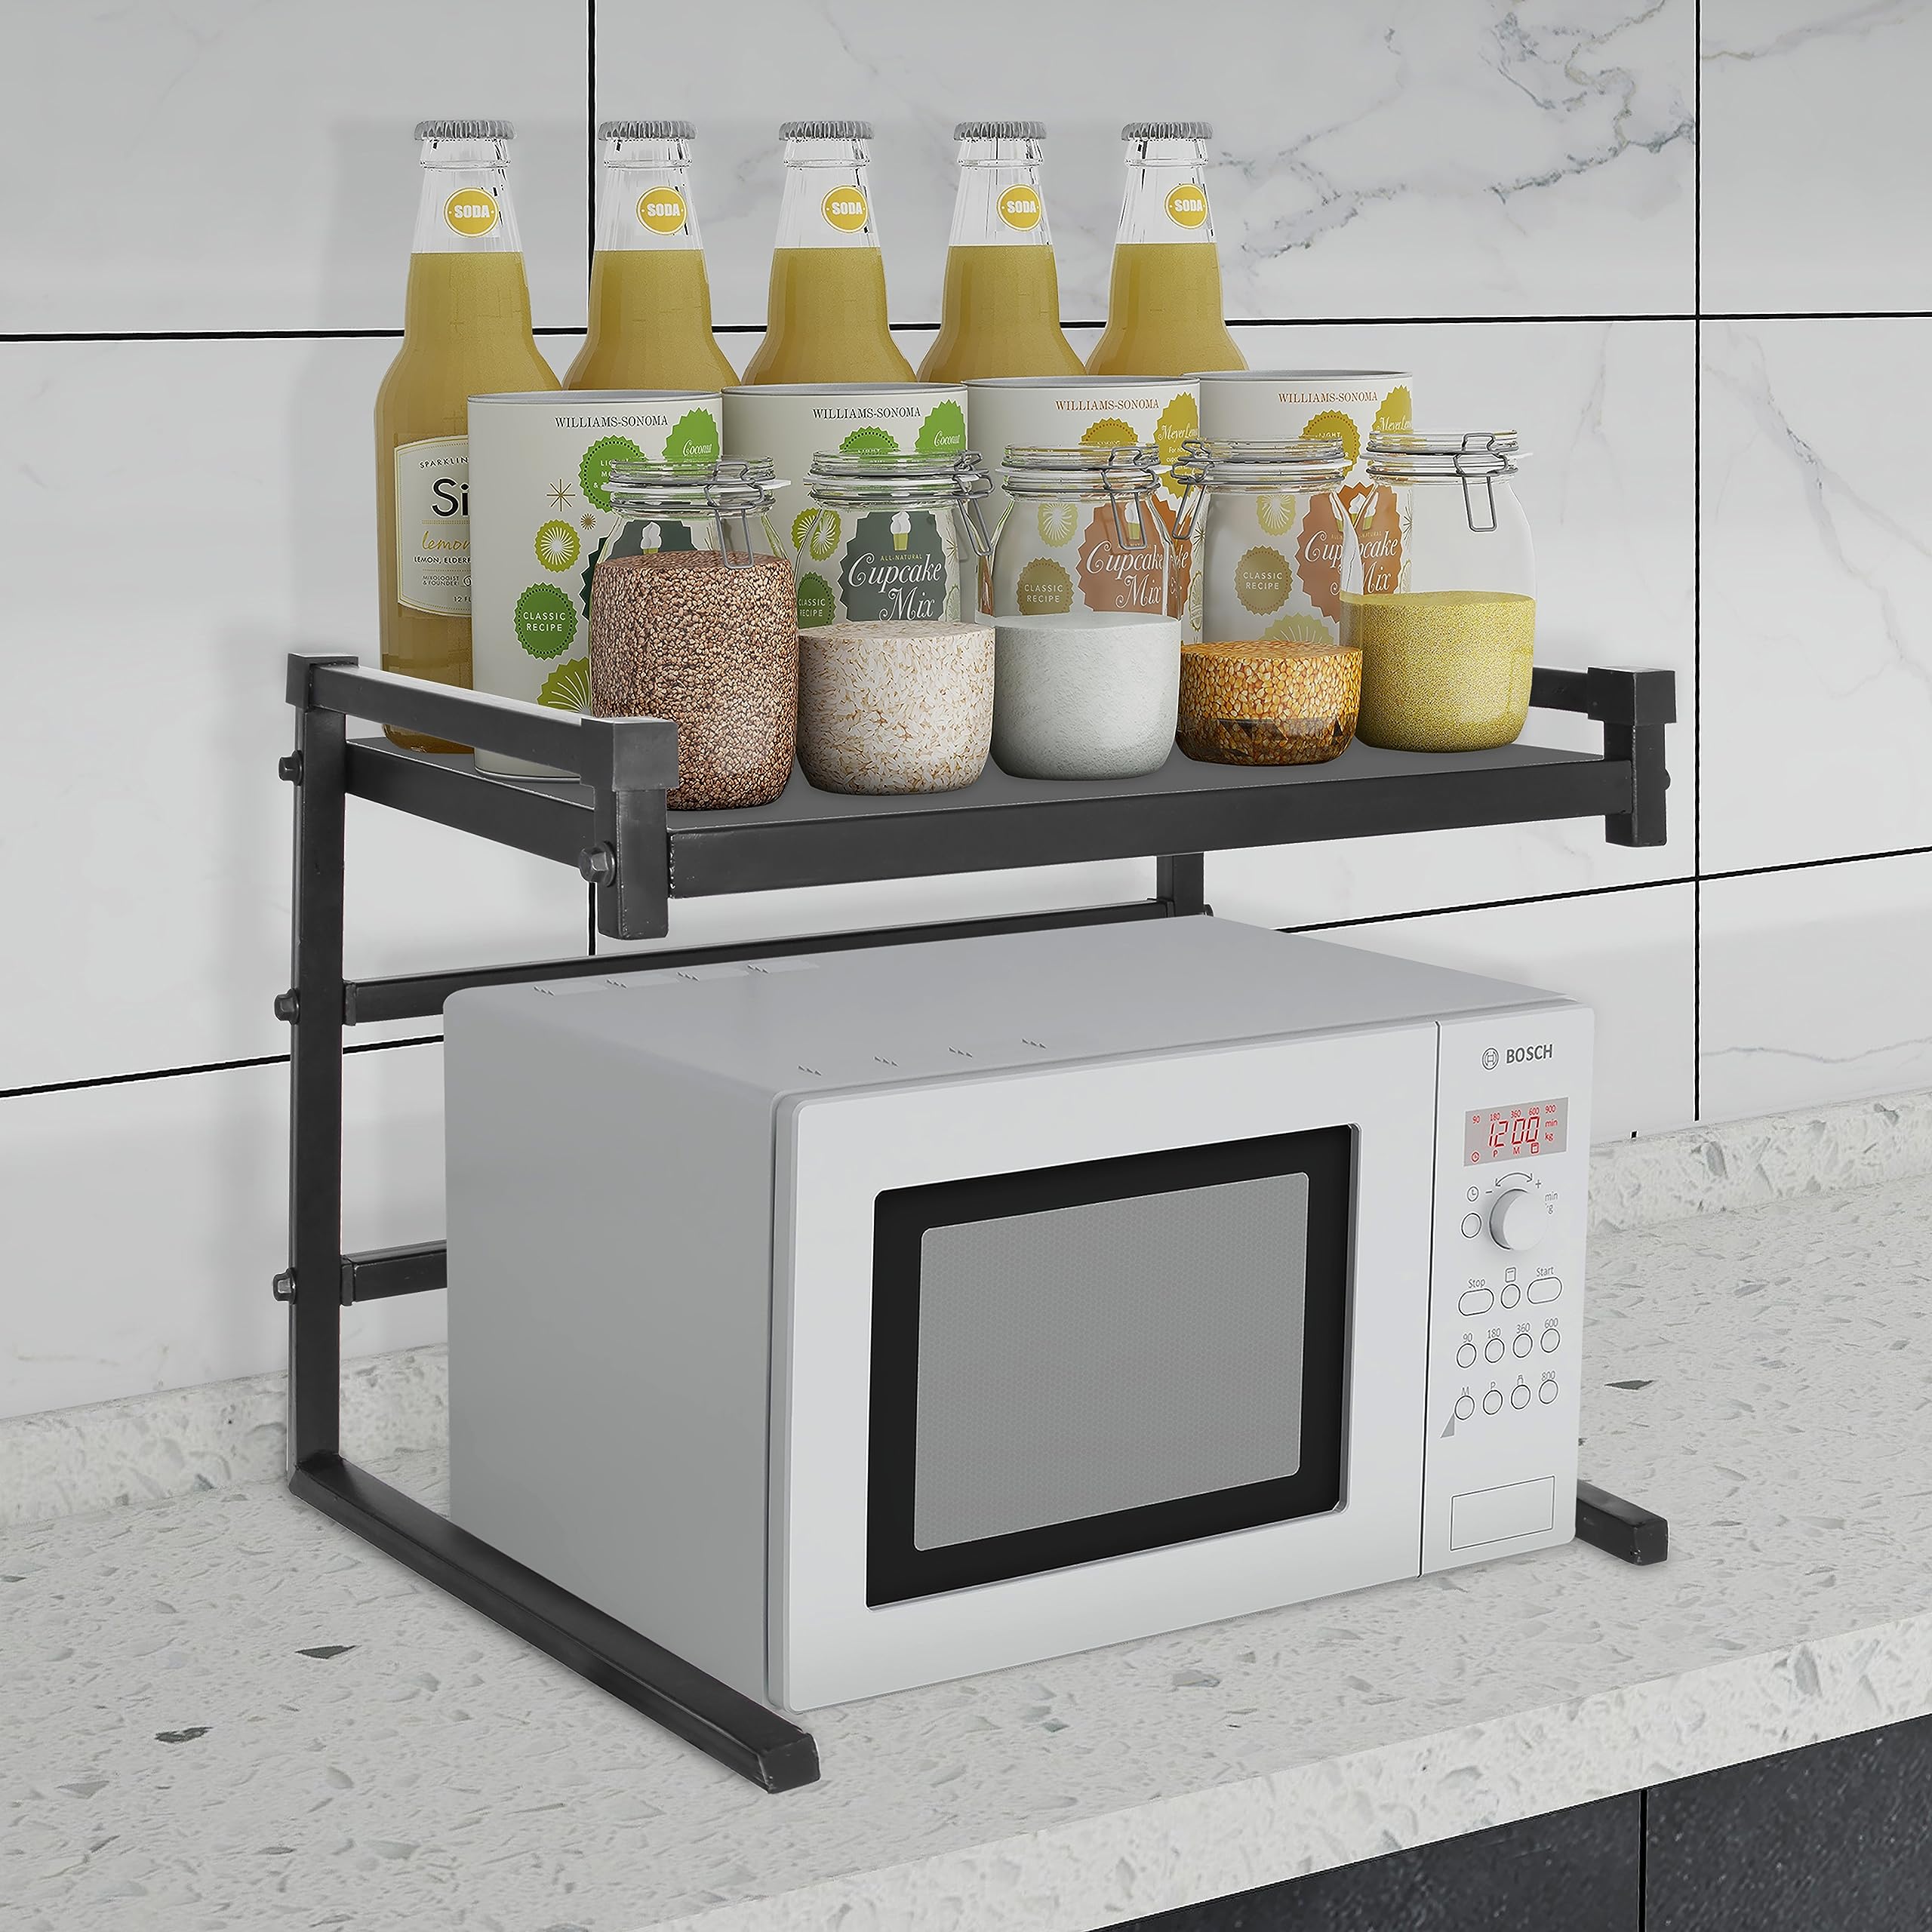 Plantex Space Saver Kitchen Organizer Stand for Convection Microwave OTG Oven – Kitchen Accessories (Black)